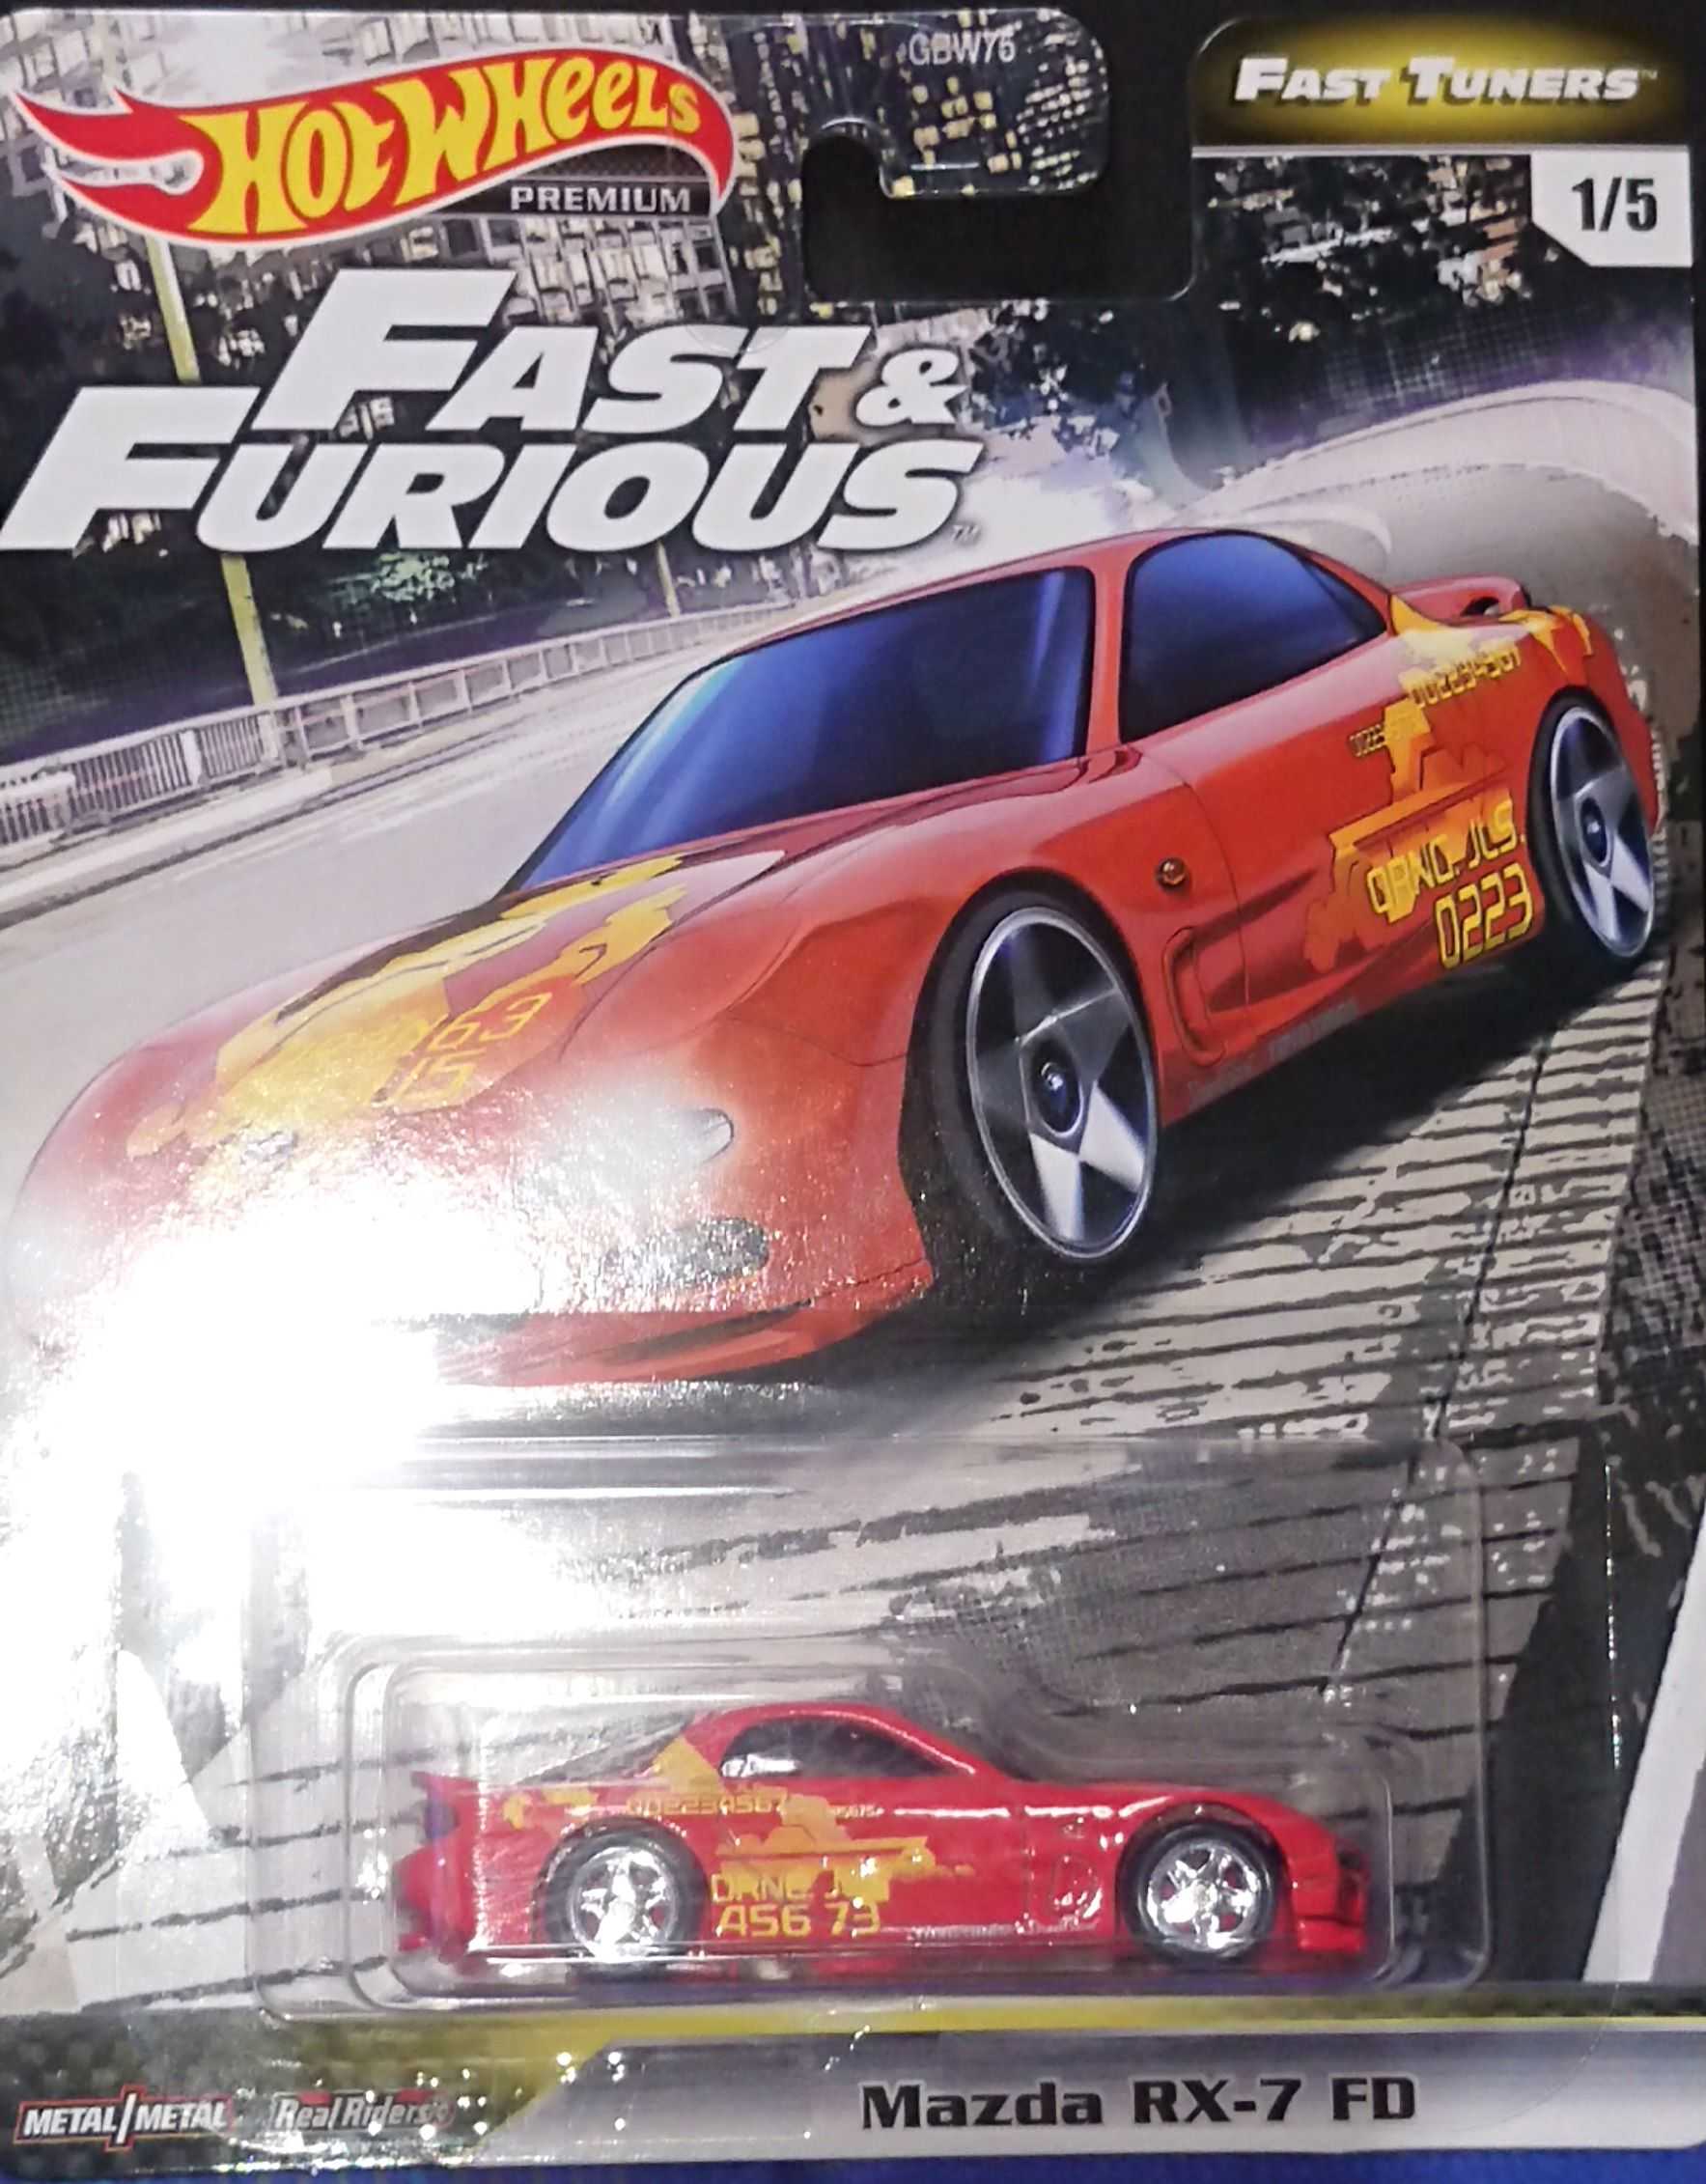 Hotwheels Fast Furious Fast Tuners Mazda Rx 7 Fd購入 Nsx Racing Evolution 楽天ブログ